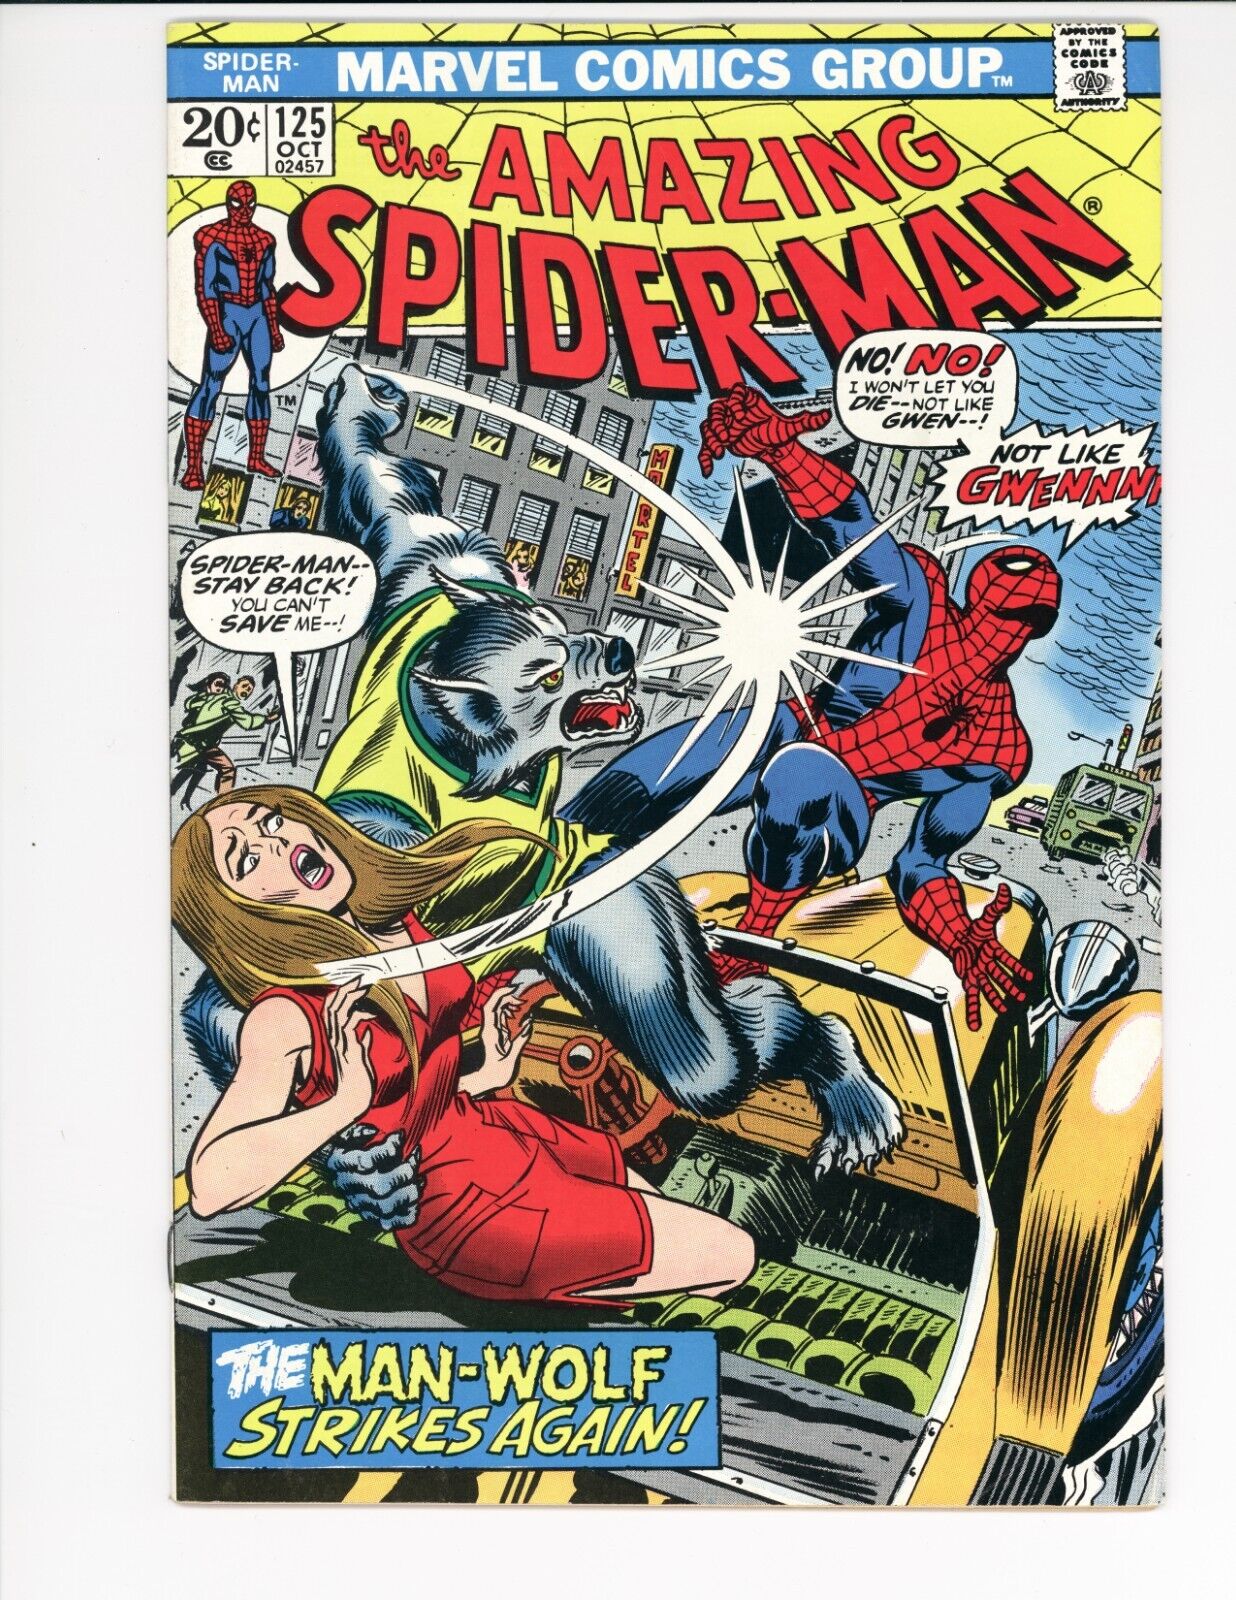 The Amazing Spider-Man #125  * Origin of Man-Wolf *  VF+/NM-  Key